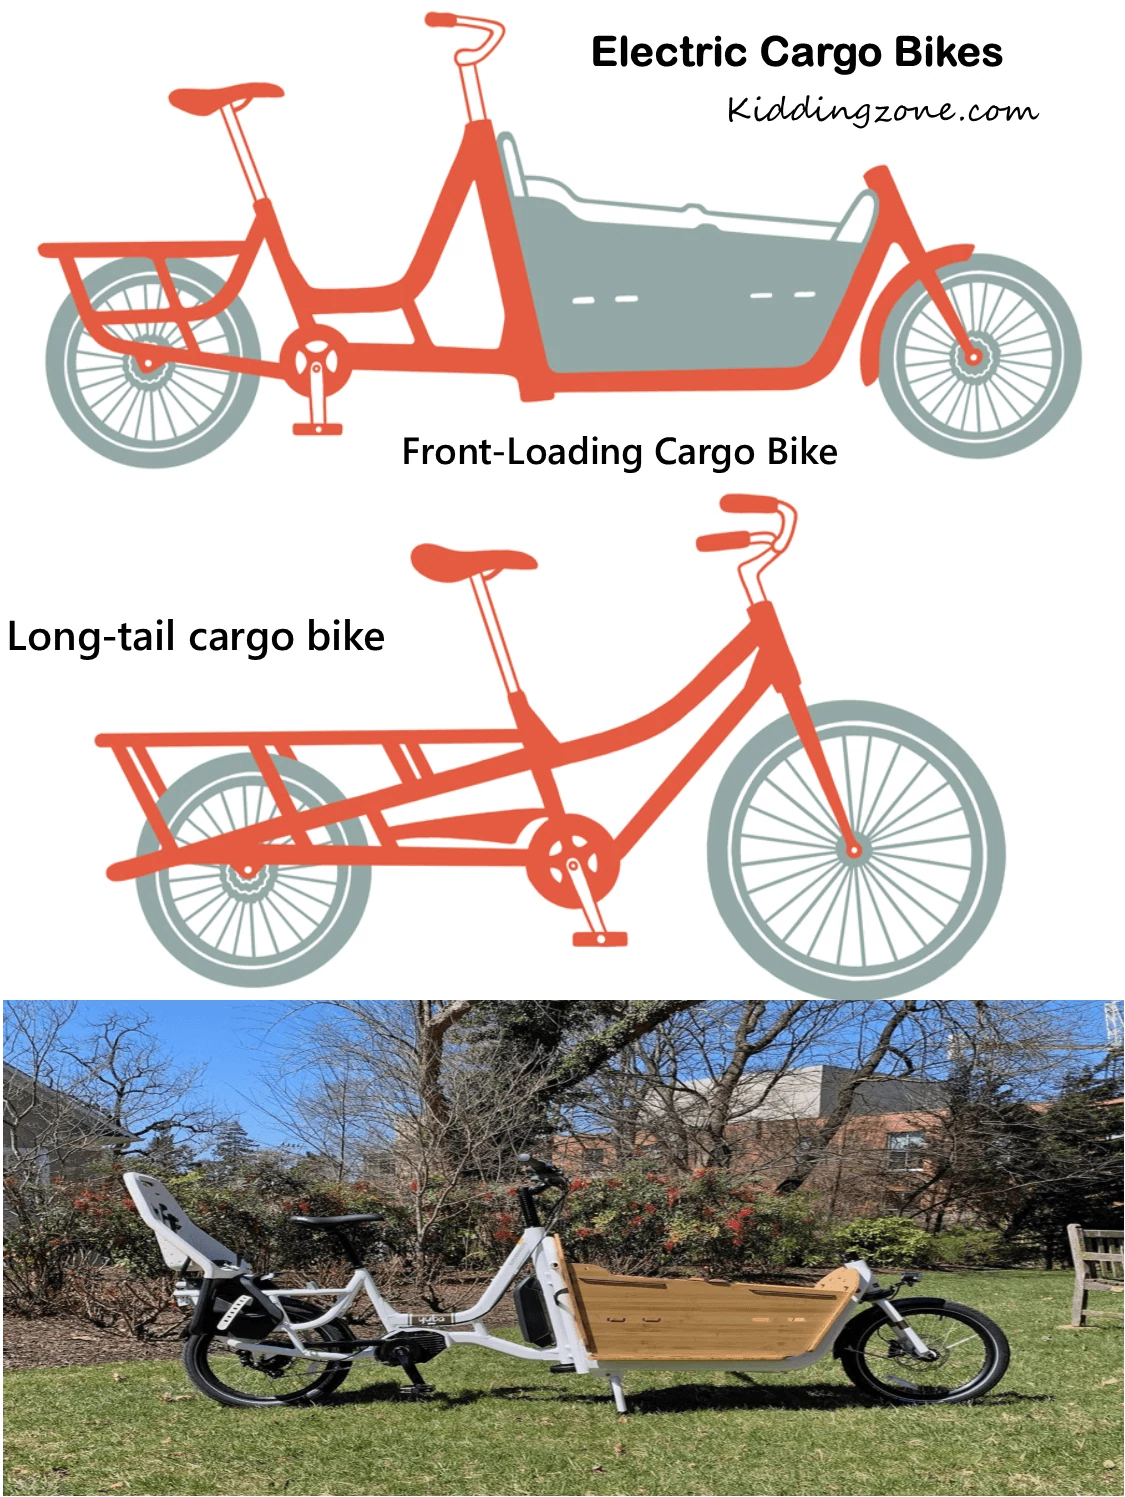 Variants of Electric Cargo Bikes